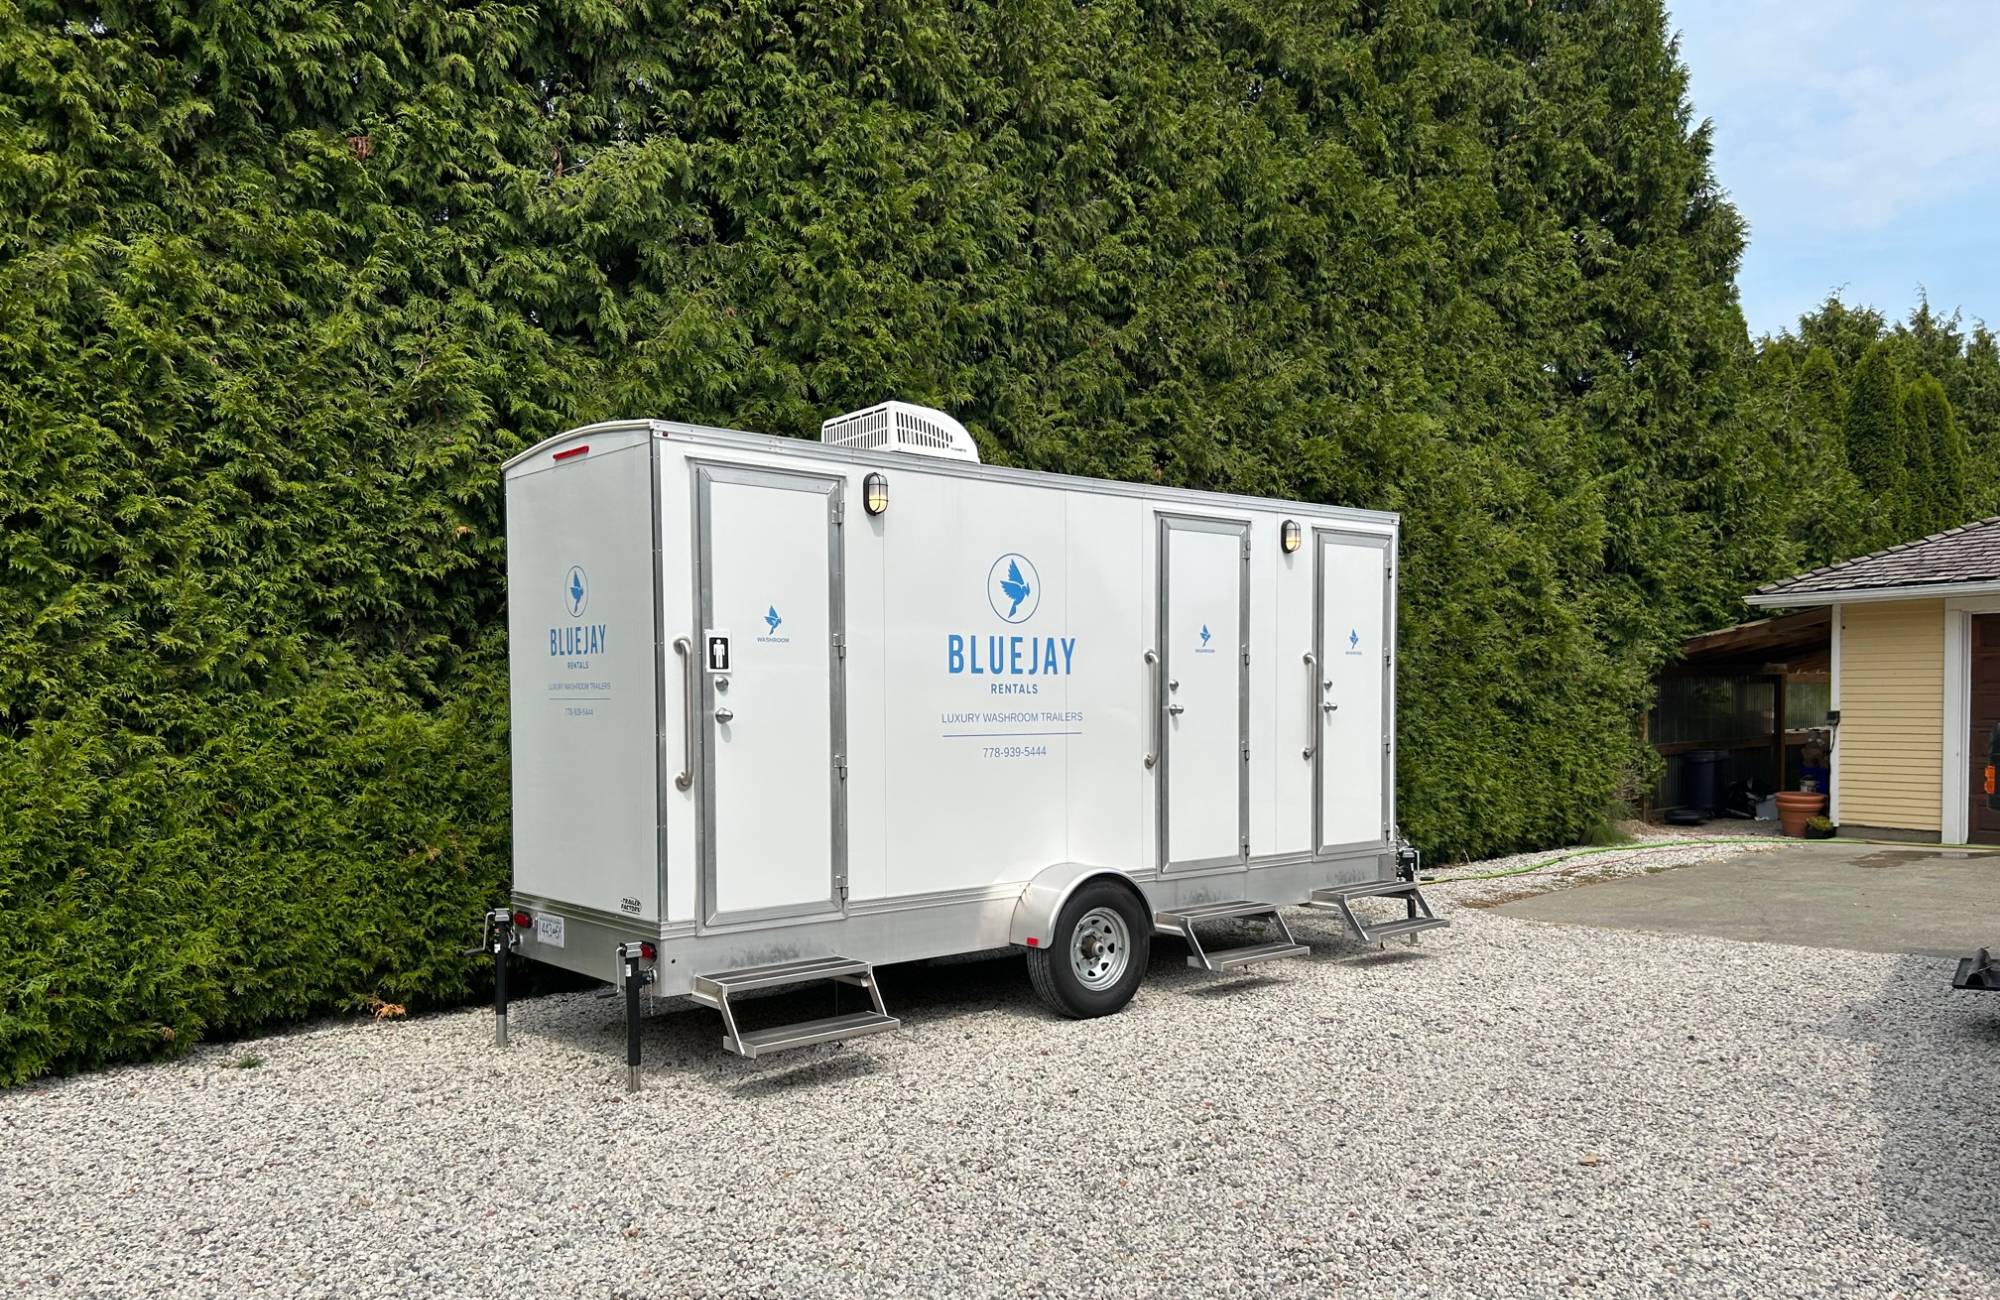 washroom rental trailer unit outside park for family event